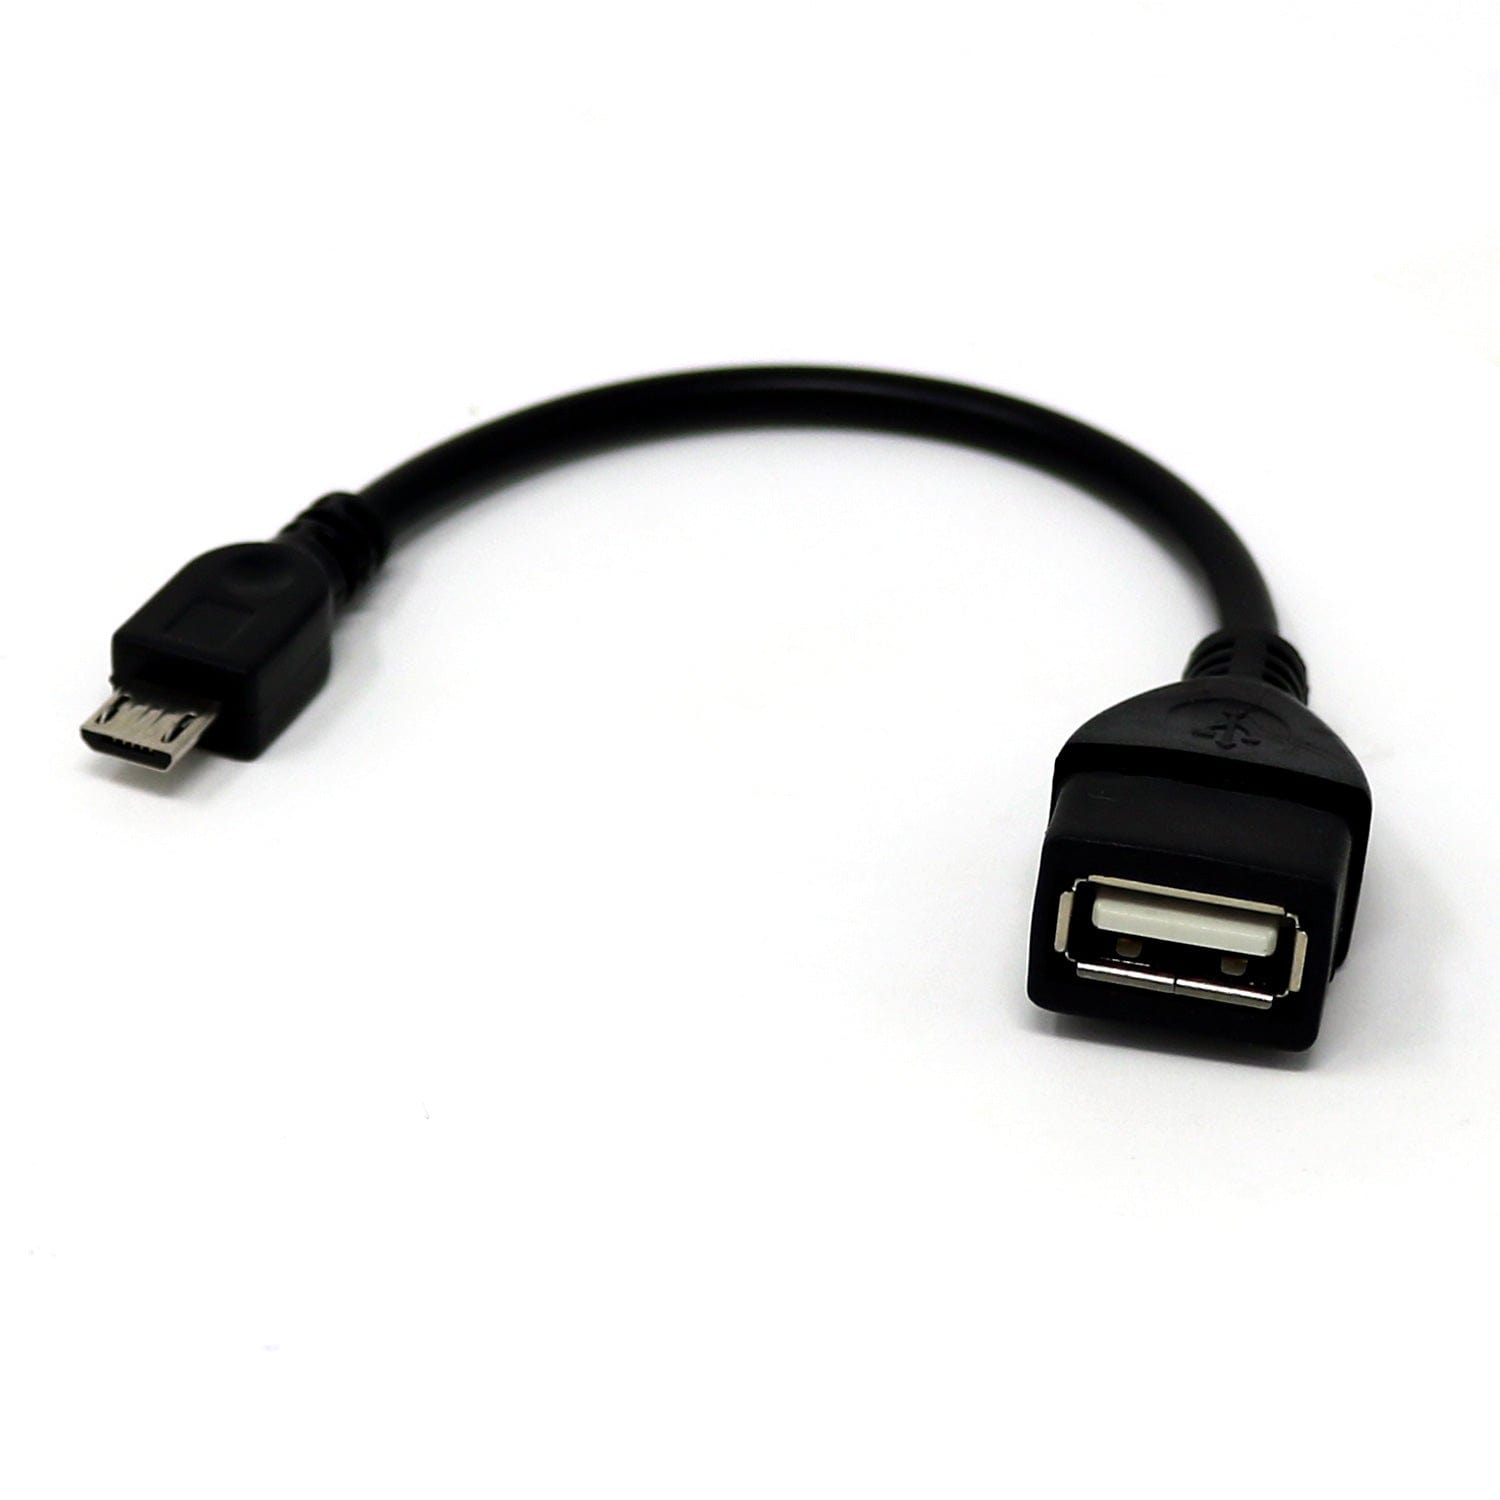 Positiv ækvator pinion USB OTG Host Cable - Micro-USB Male to USB-A Female | The Pi Hut